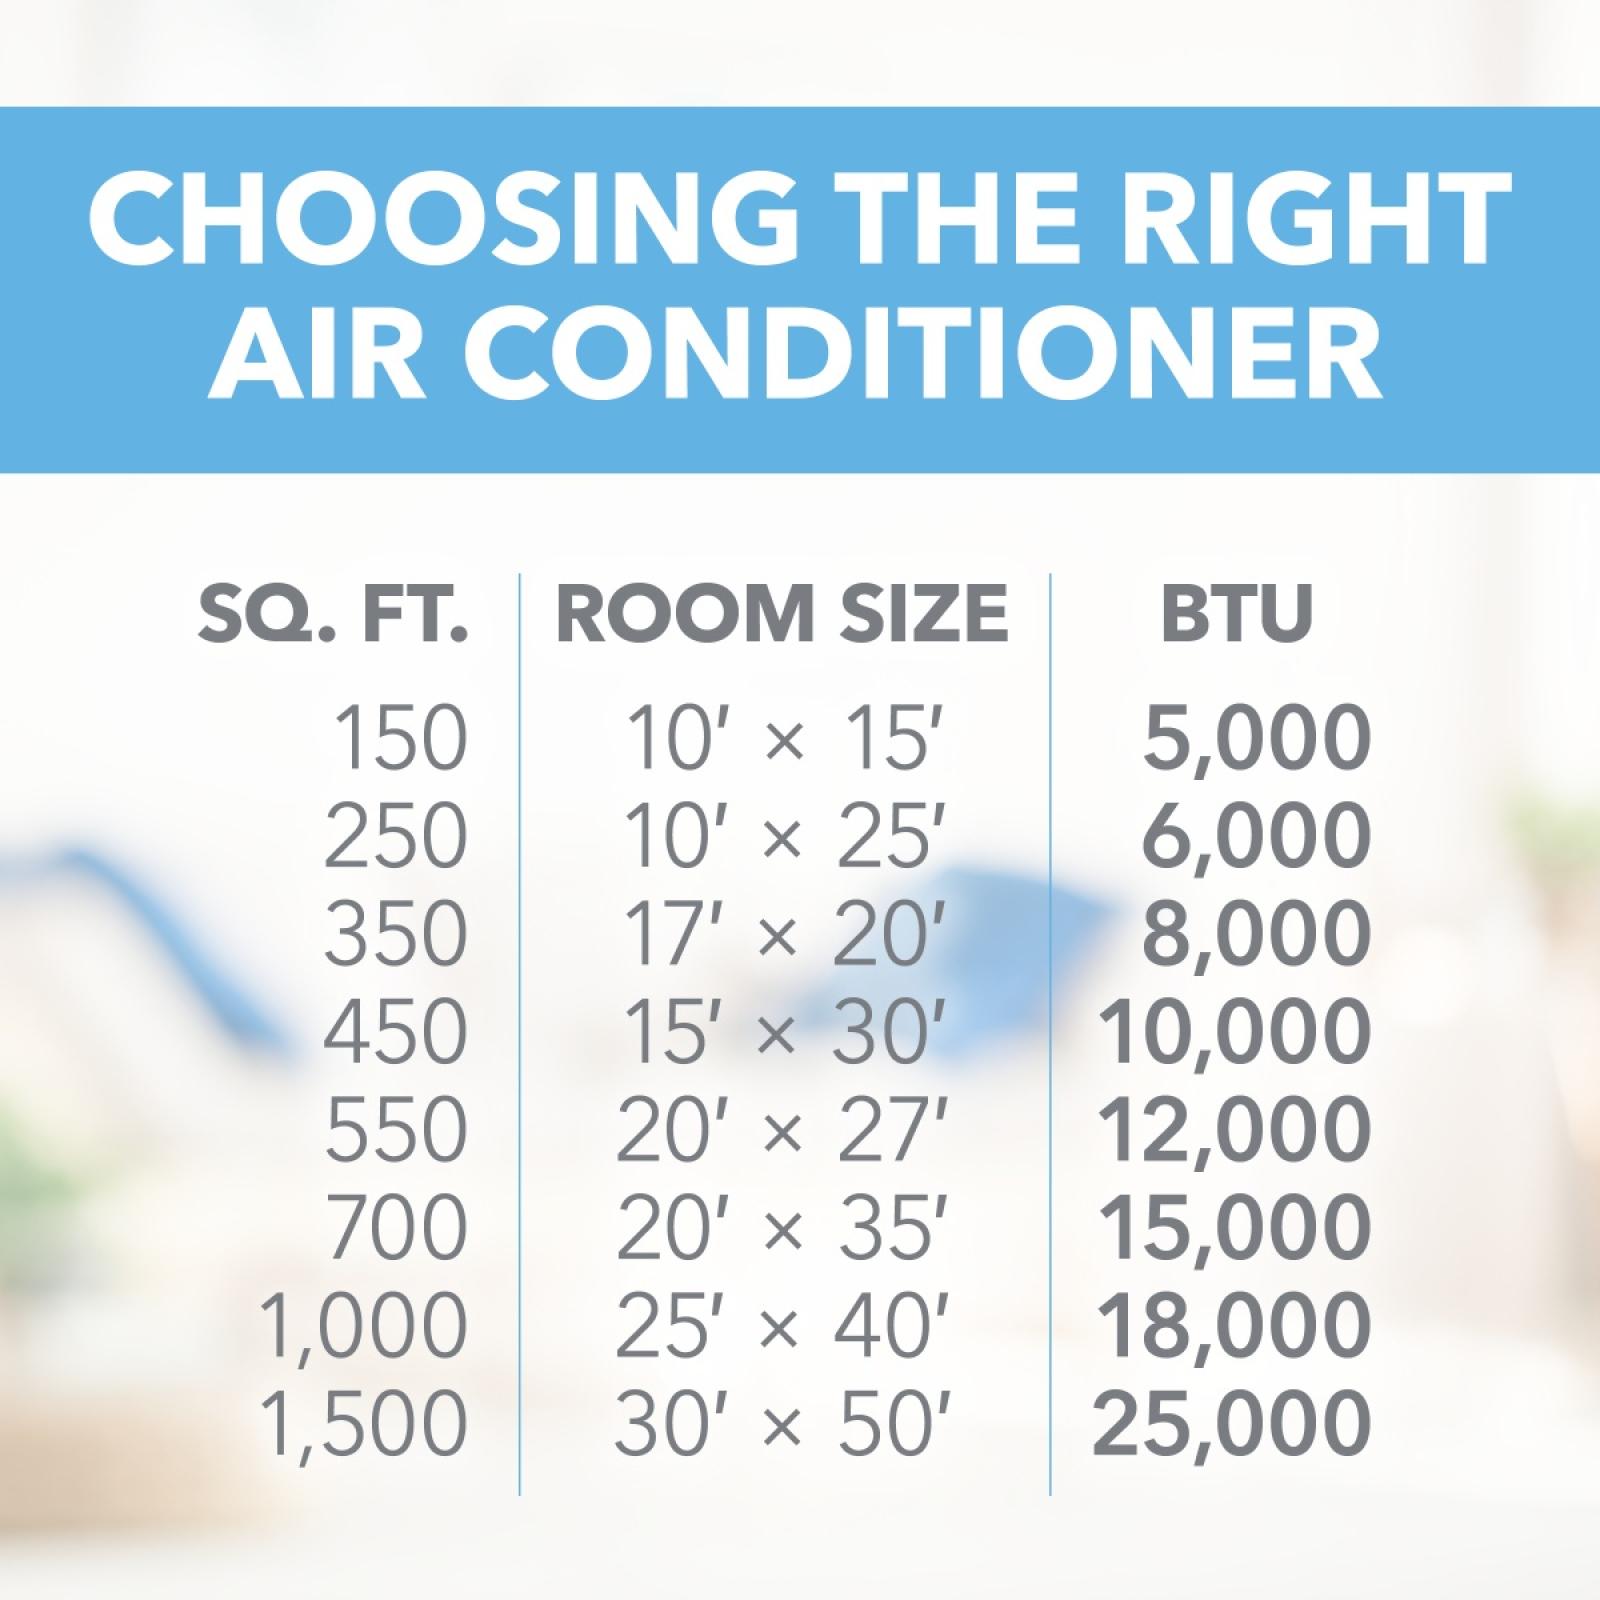 Perfect Aire 14,000 BTU Portable Air Conditioner